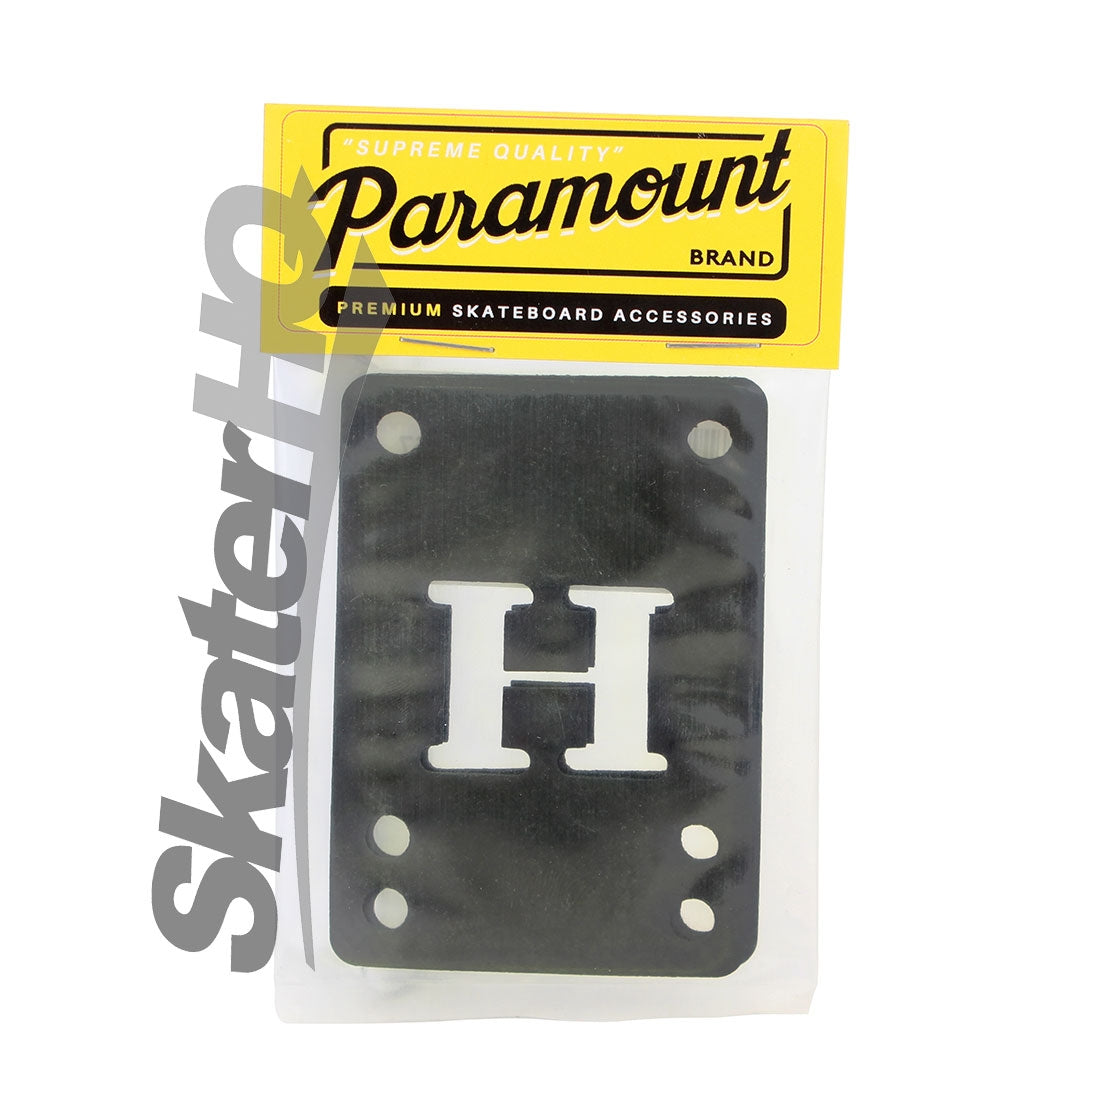 Paramount 1mm Soft Riser Pads - Black Skateboard Hardware and Parts